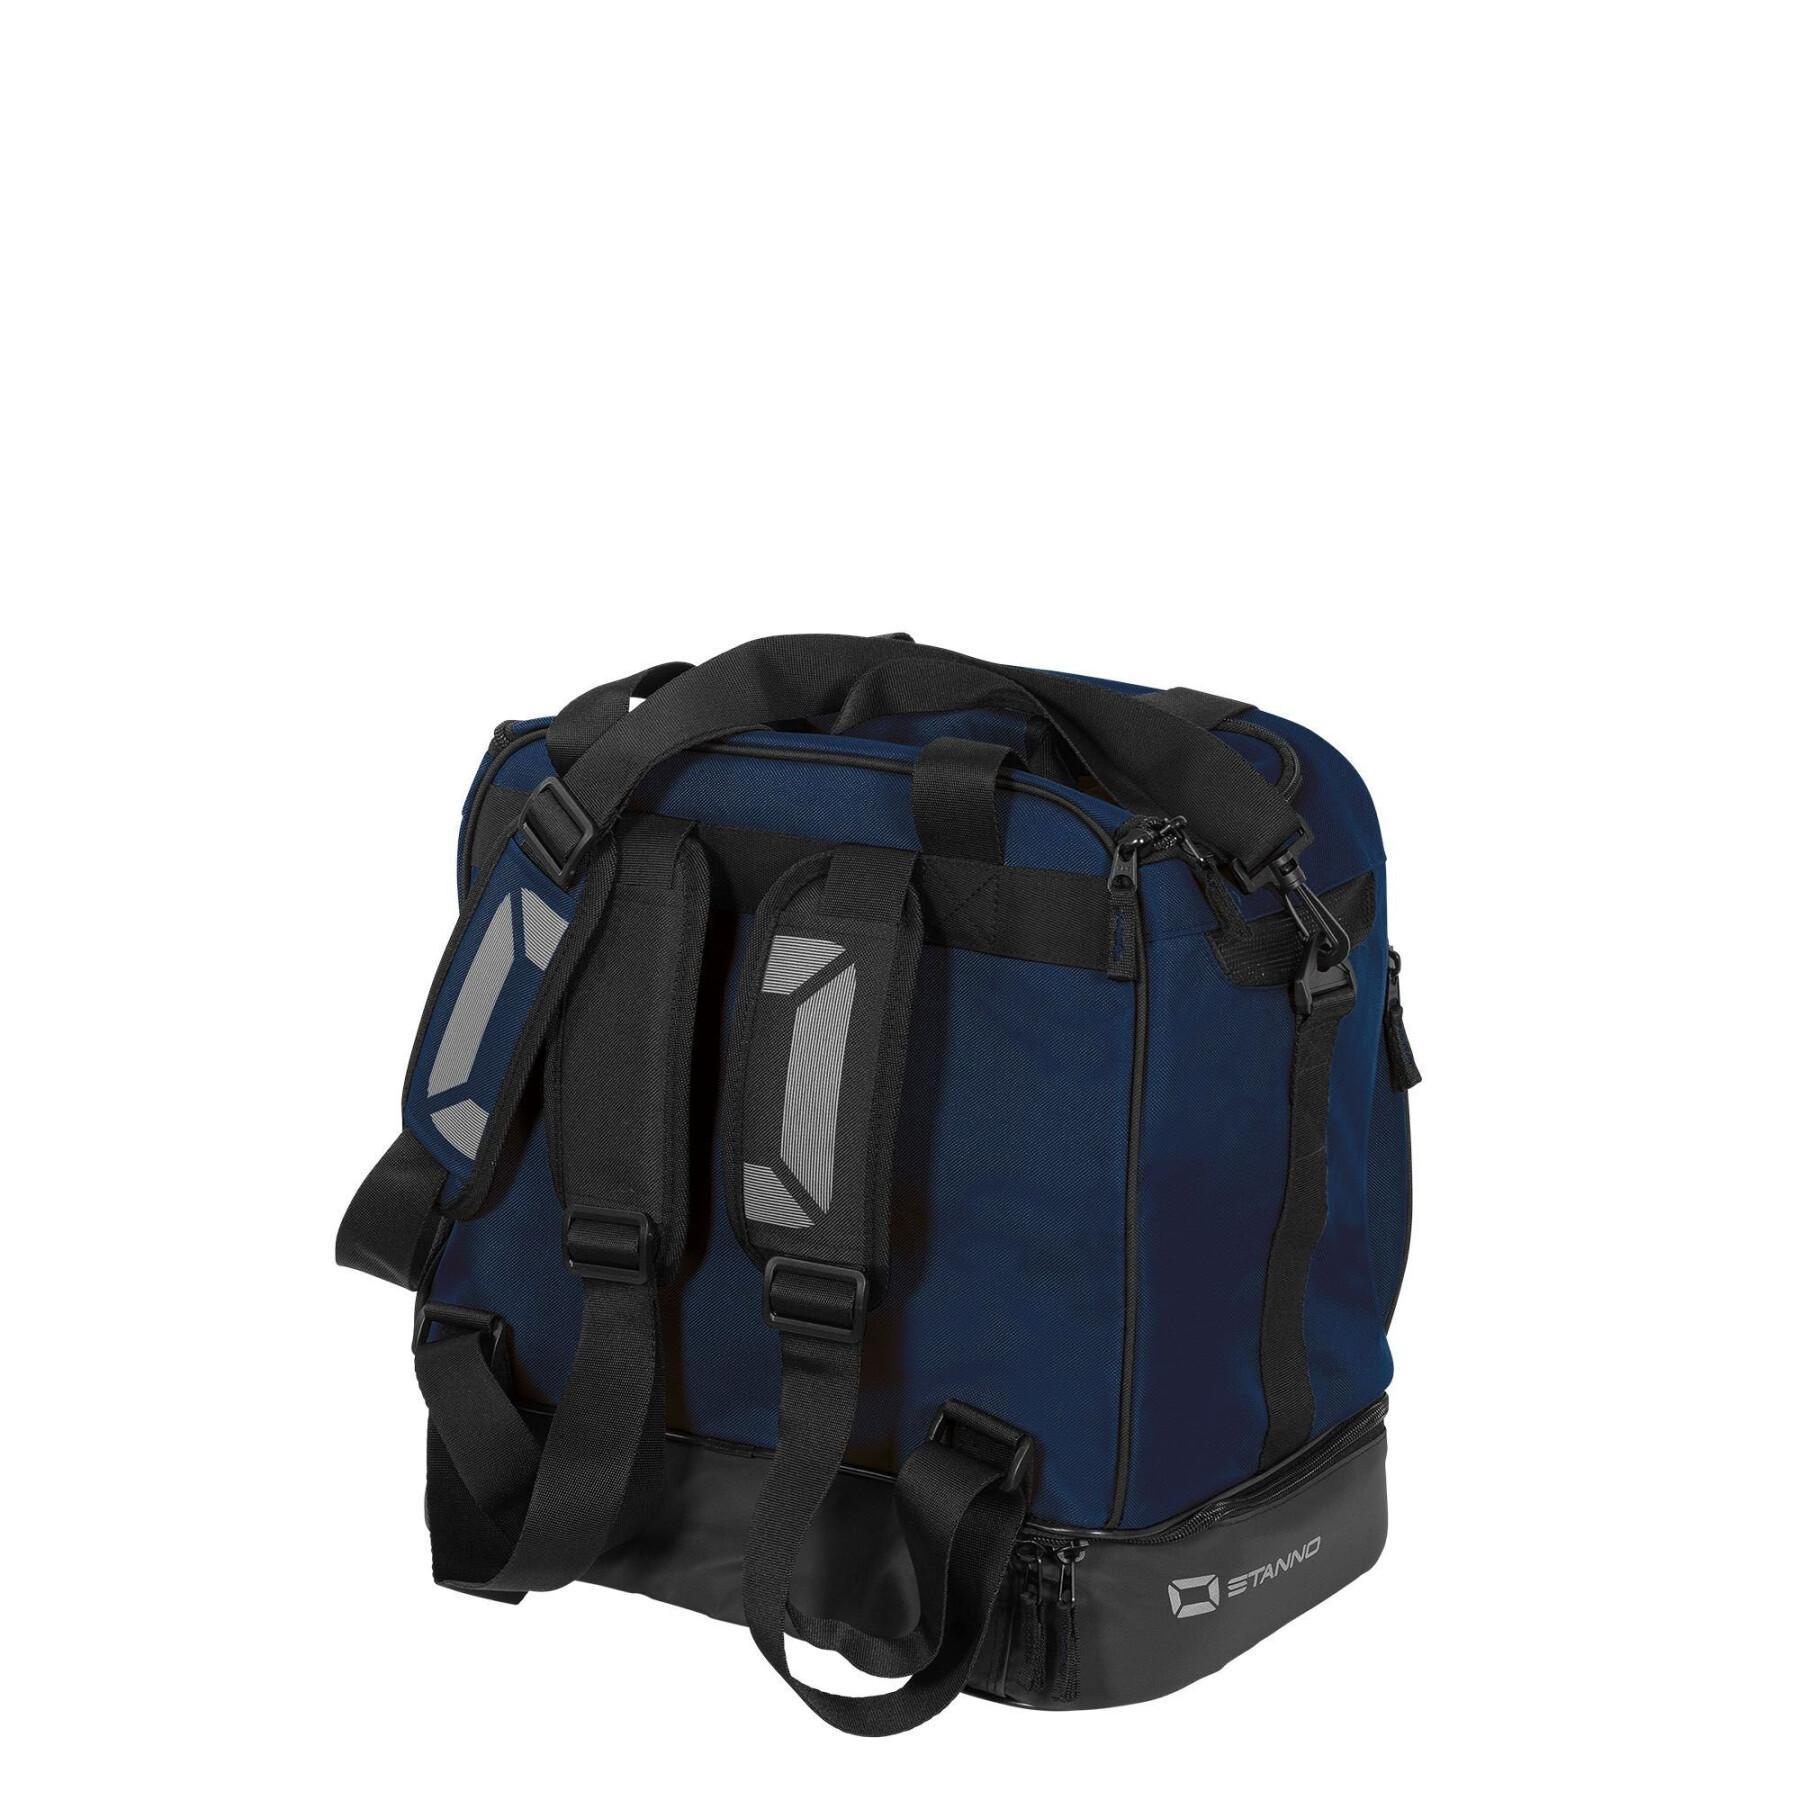 Backpack Stanno Pro prime